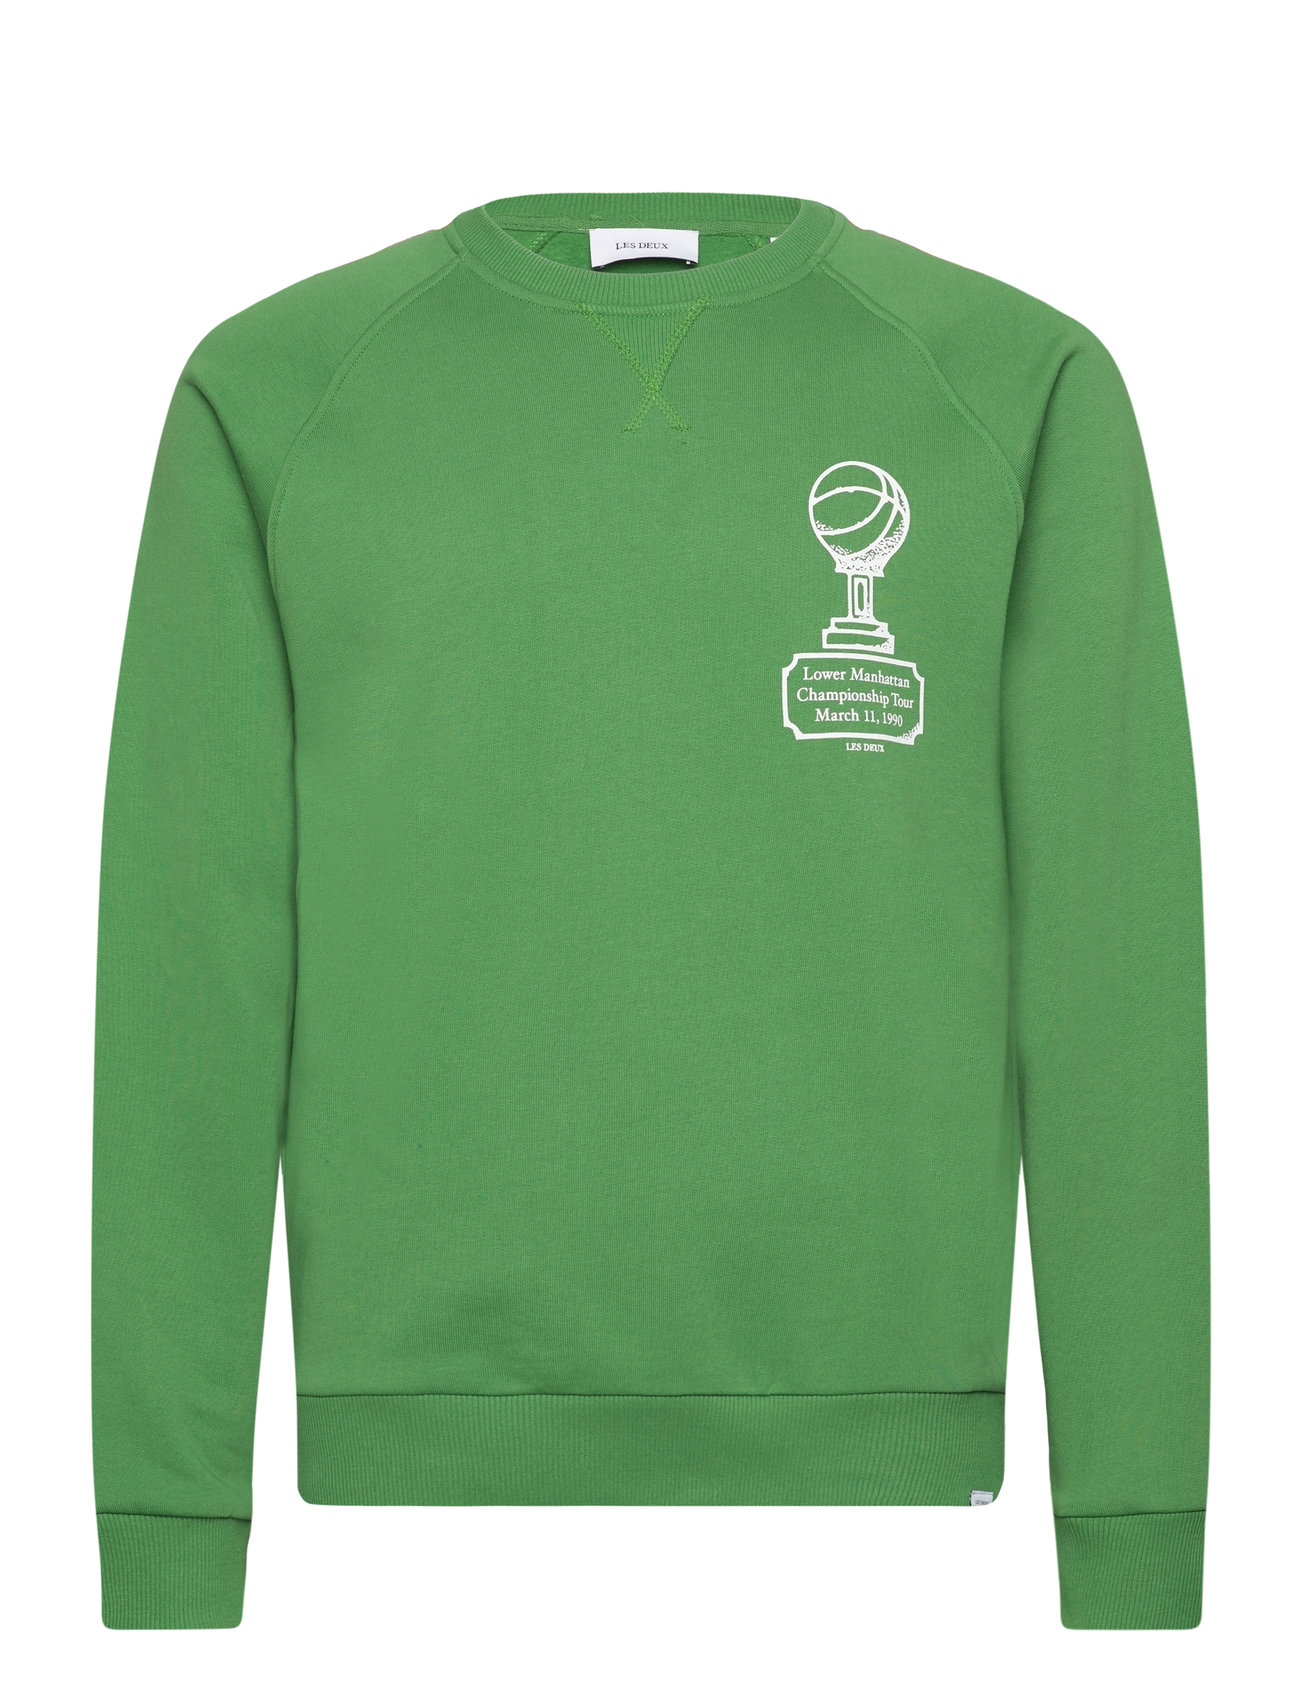 Tournament Sweatshirt Tops Sweatshirts & Hoodies Sweatshirts Green Les Deux